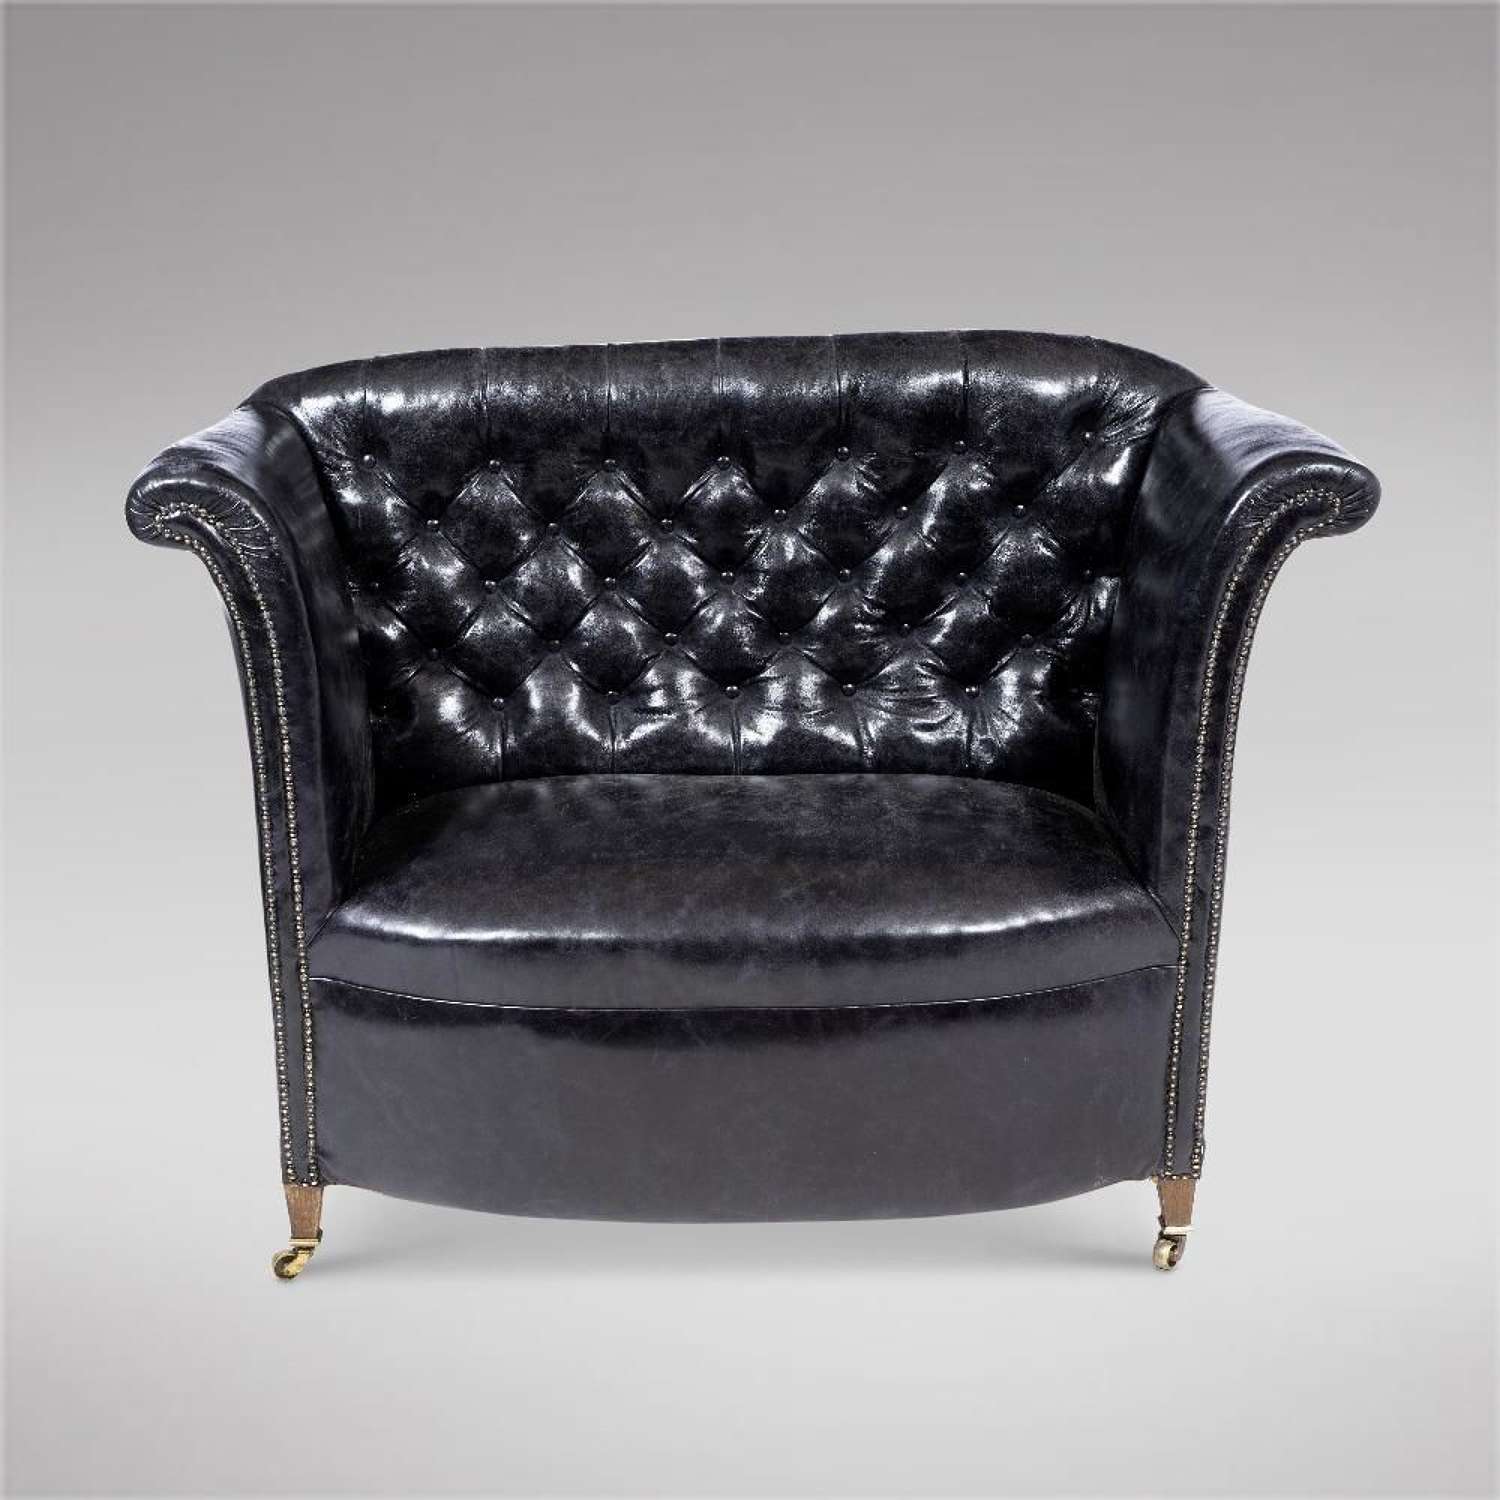 Lovely Black Leather Sofa